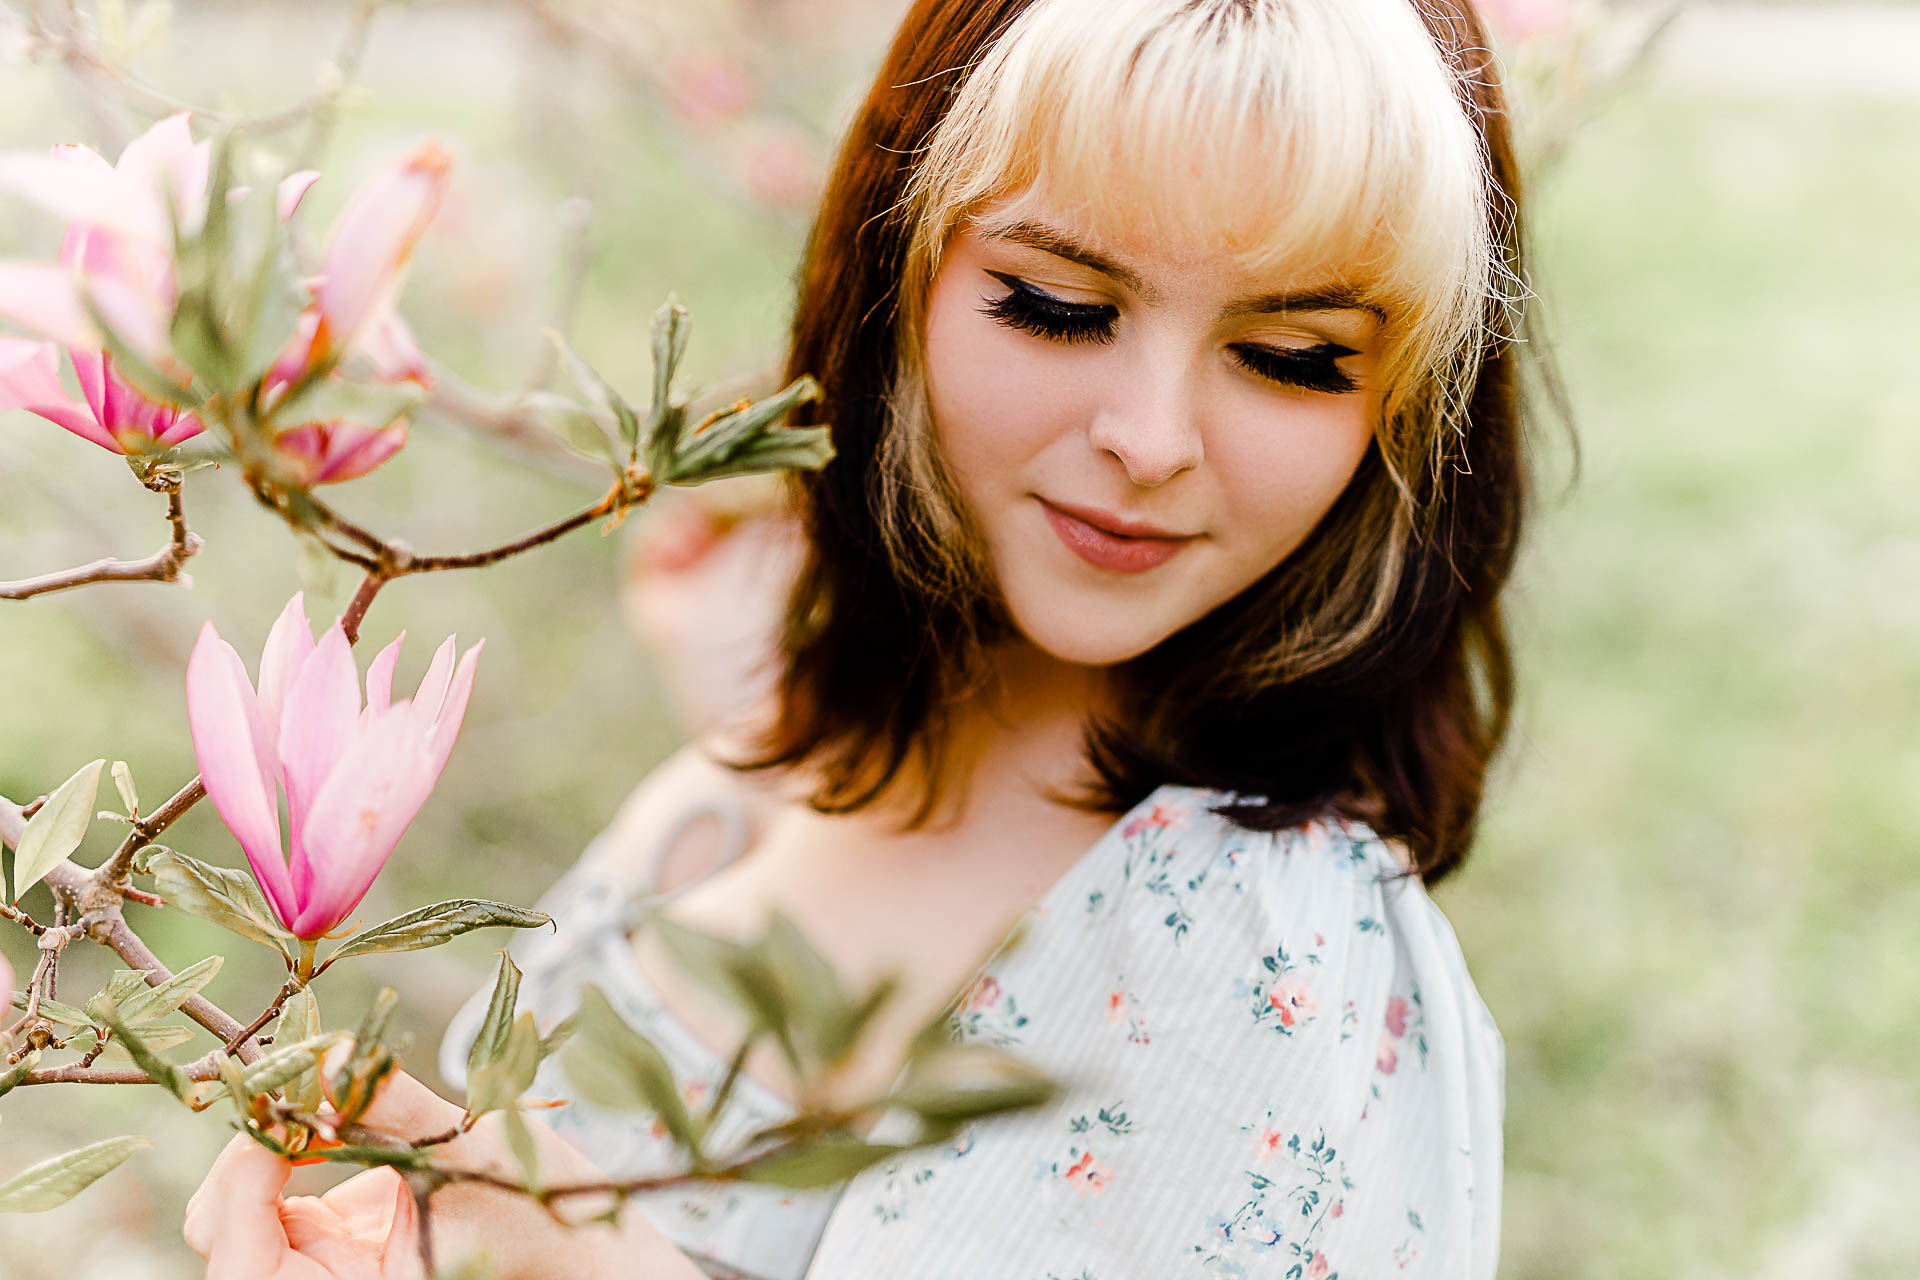 Photo by Kingston Massachusetts Photographer Christina Runnals Photography | Girl standing in flowers